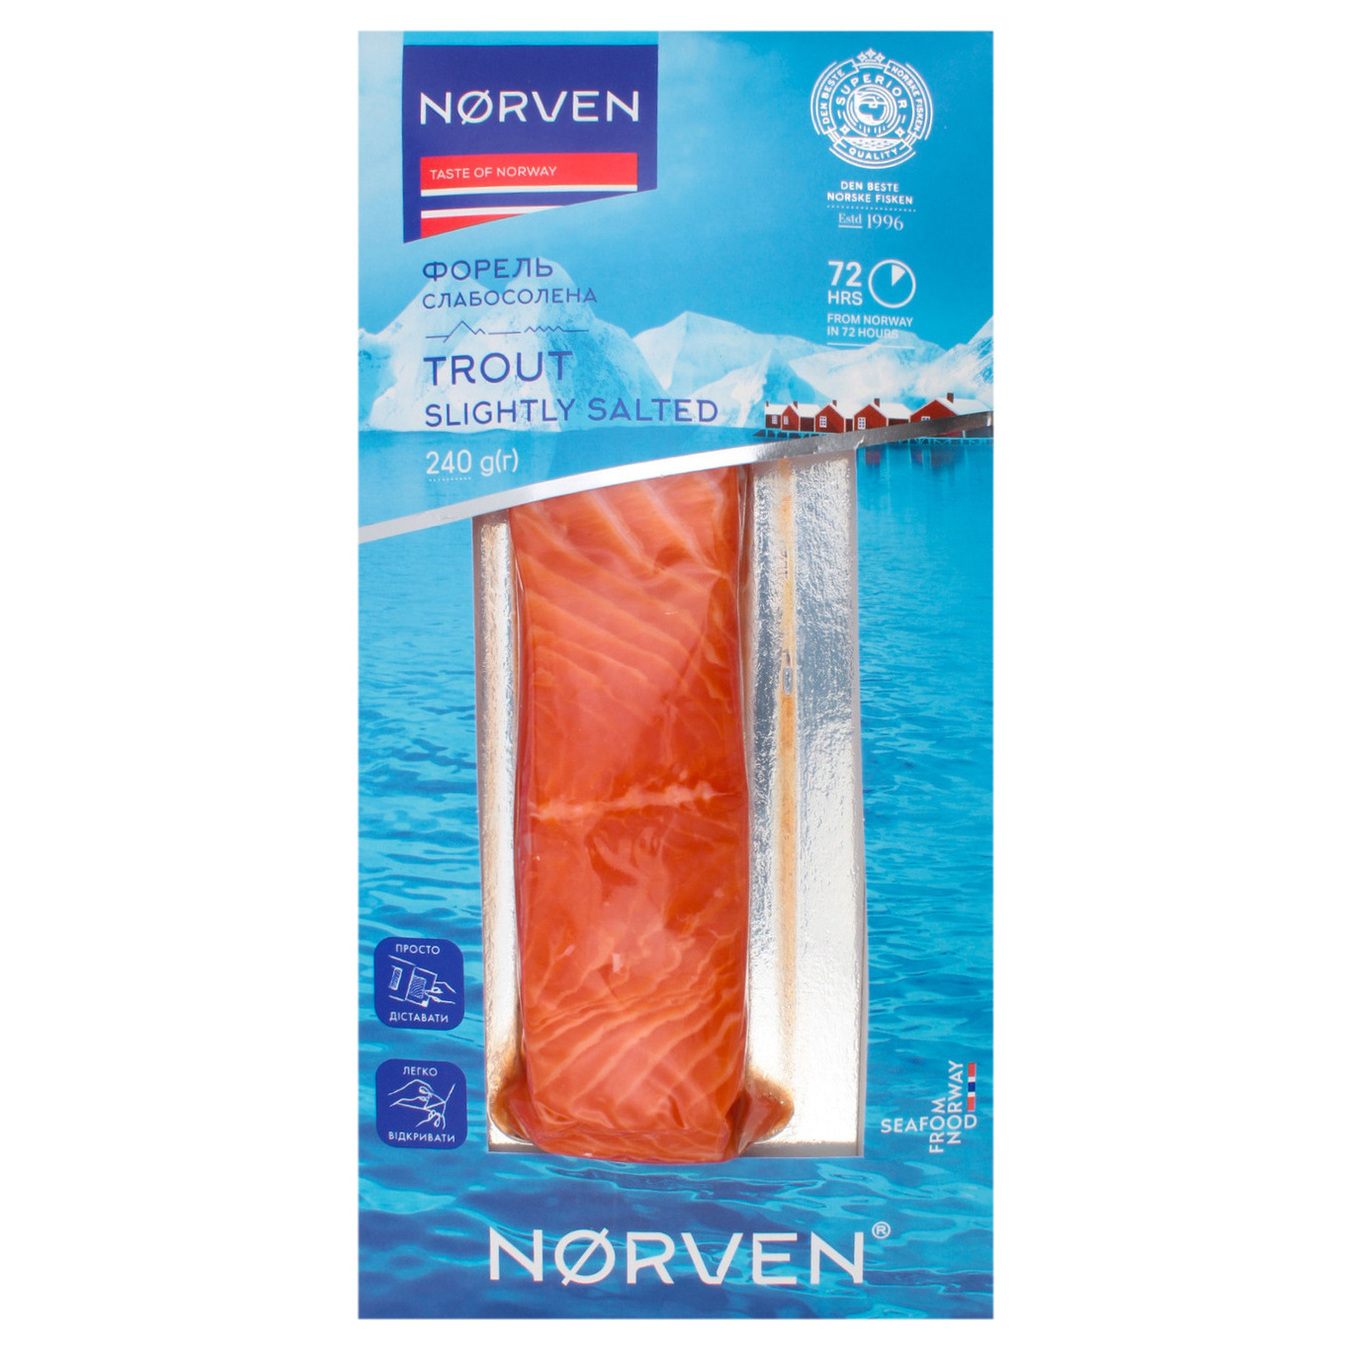 Norven lightly salted trout fillet-piece 240g